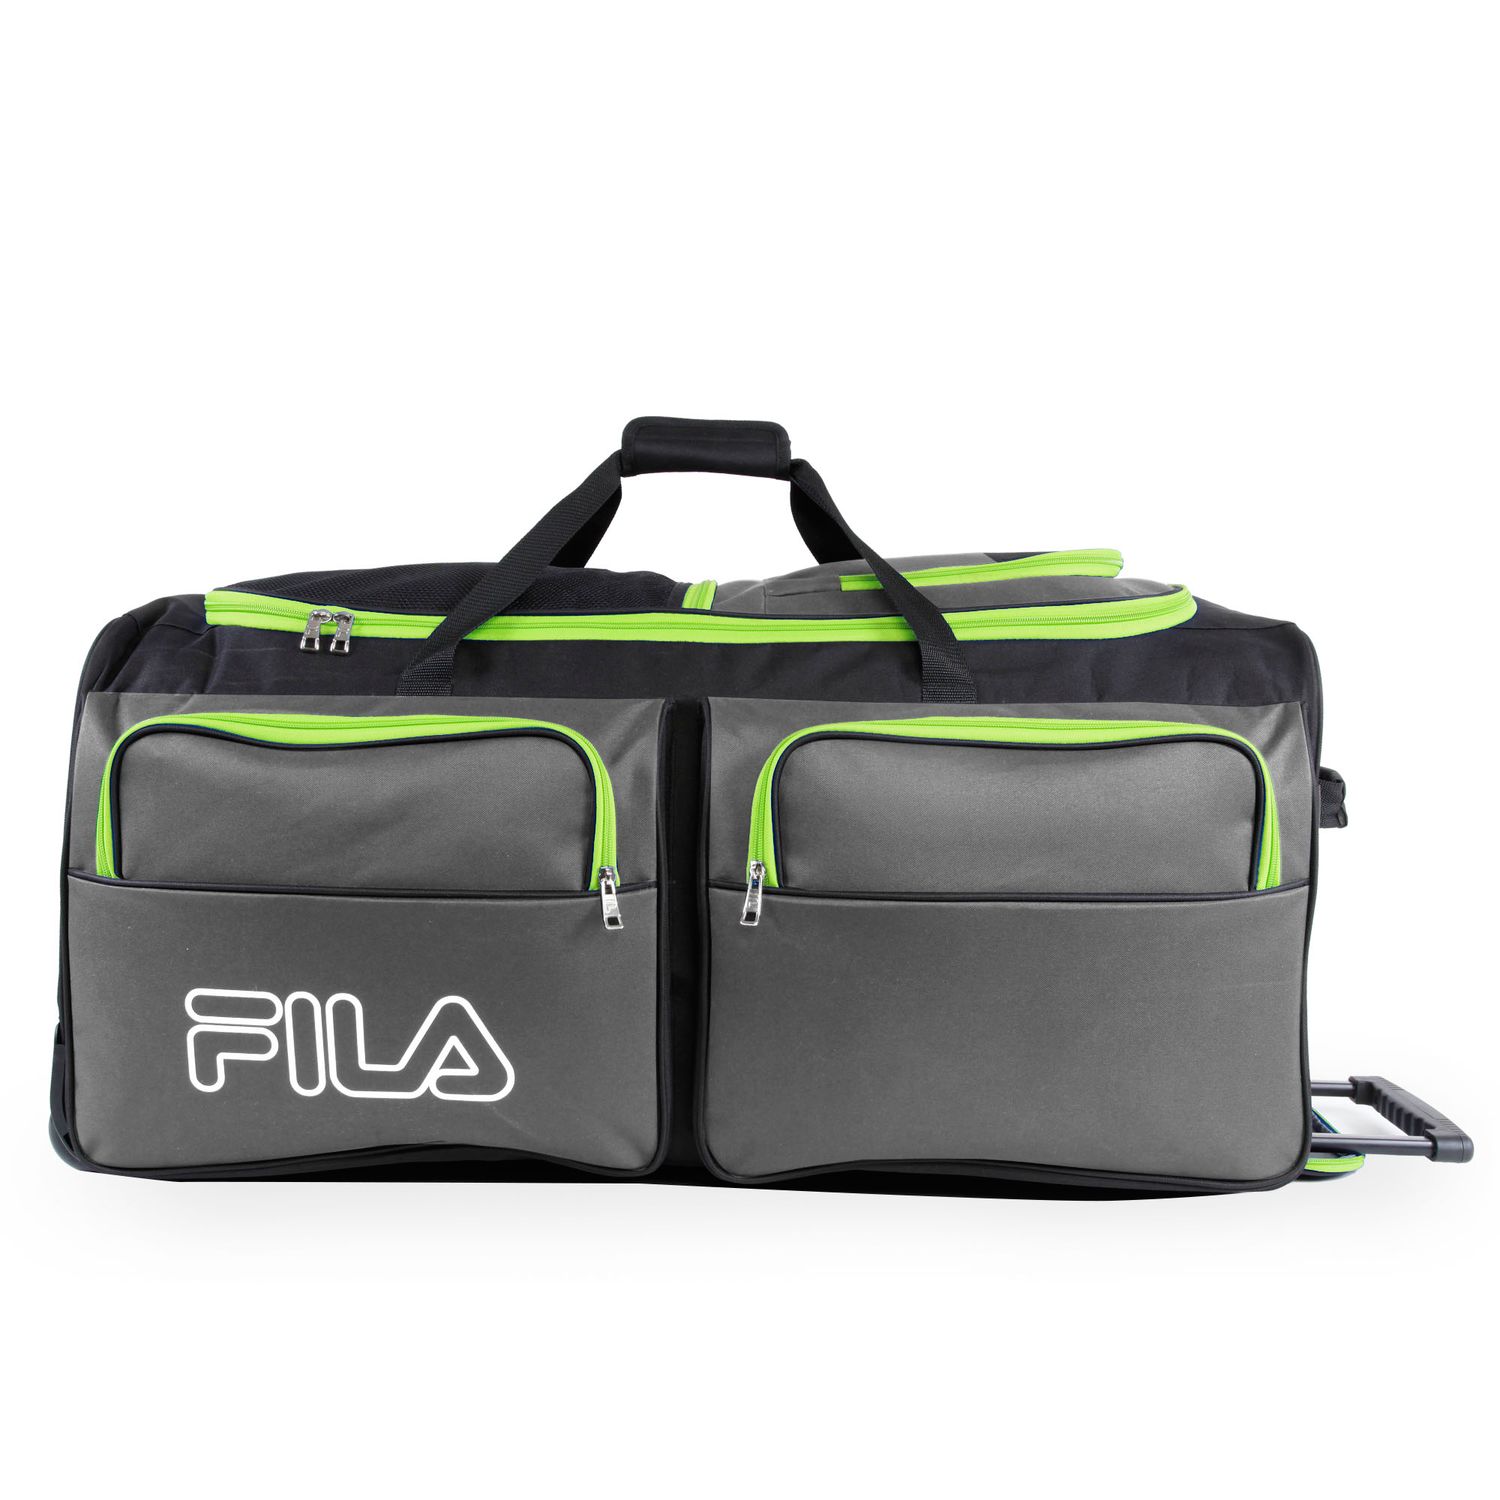 fila duffle bag with wheels